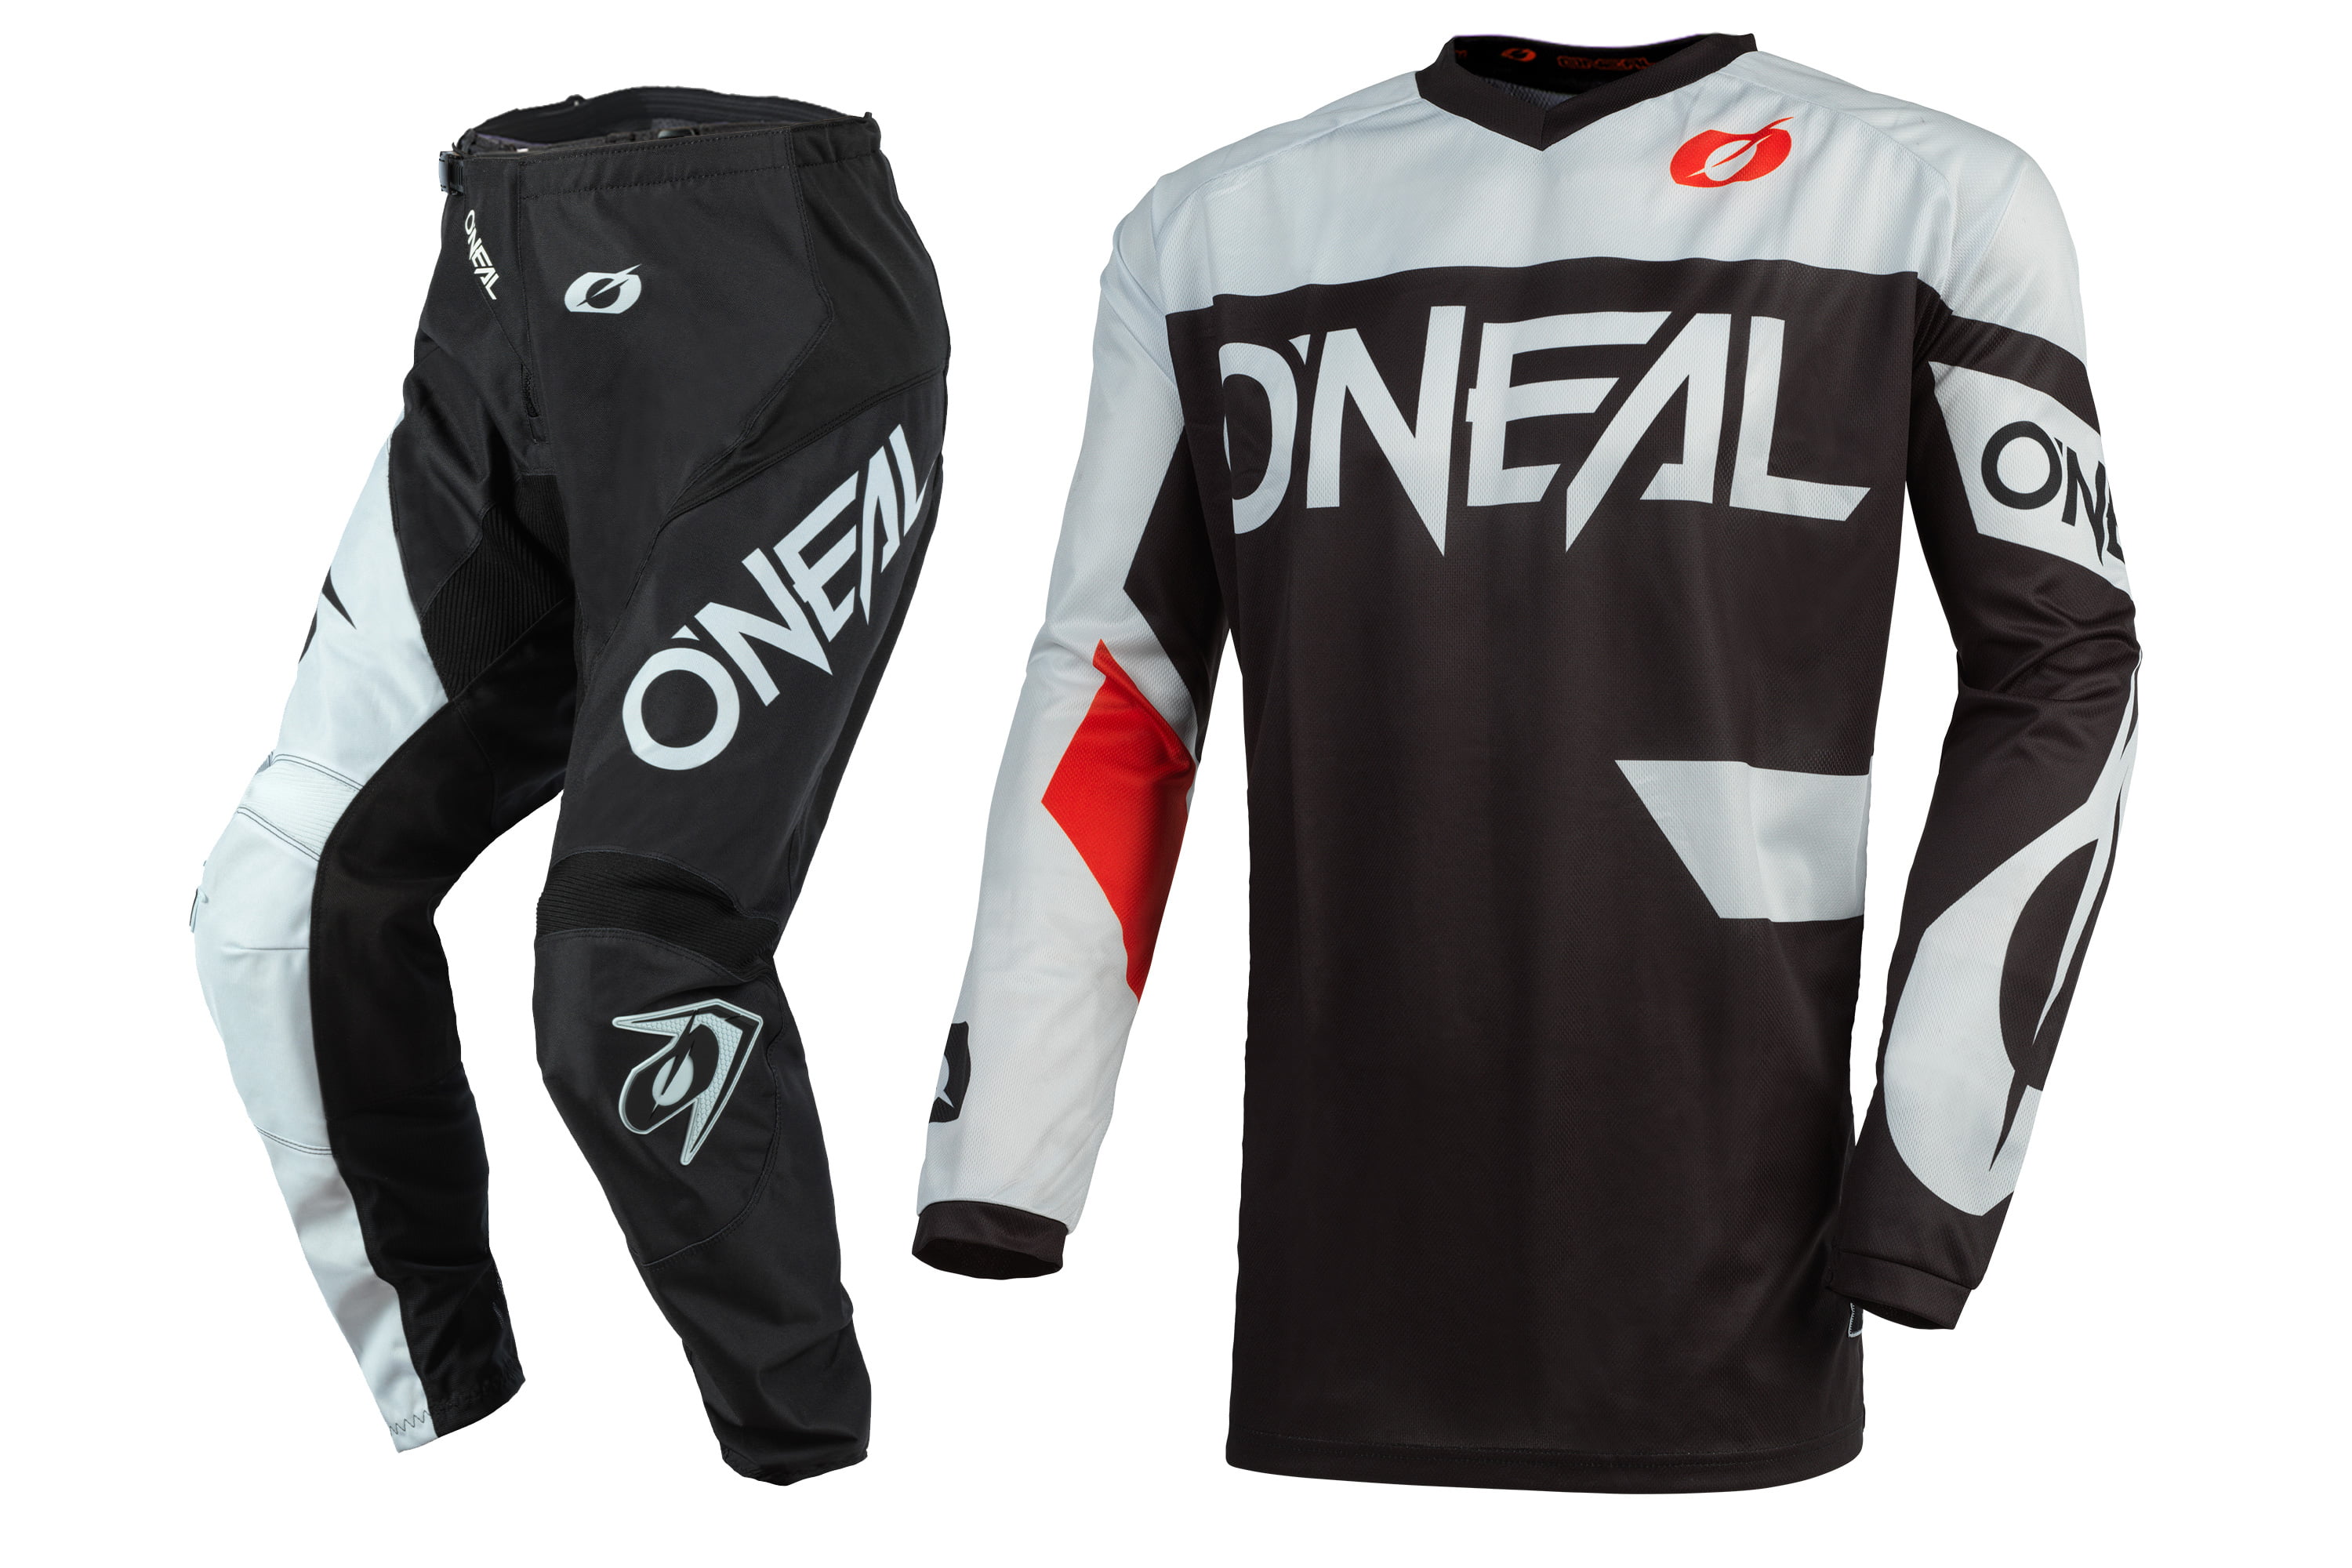 Pants W30 / Jersey Medium ONeal Element Racewear Black/Gray Adult motocross MX off-road dirt bike Jersey Pants combo riding gear set 